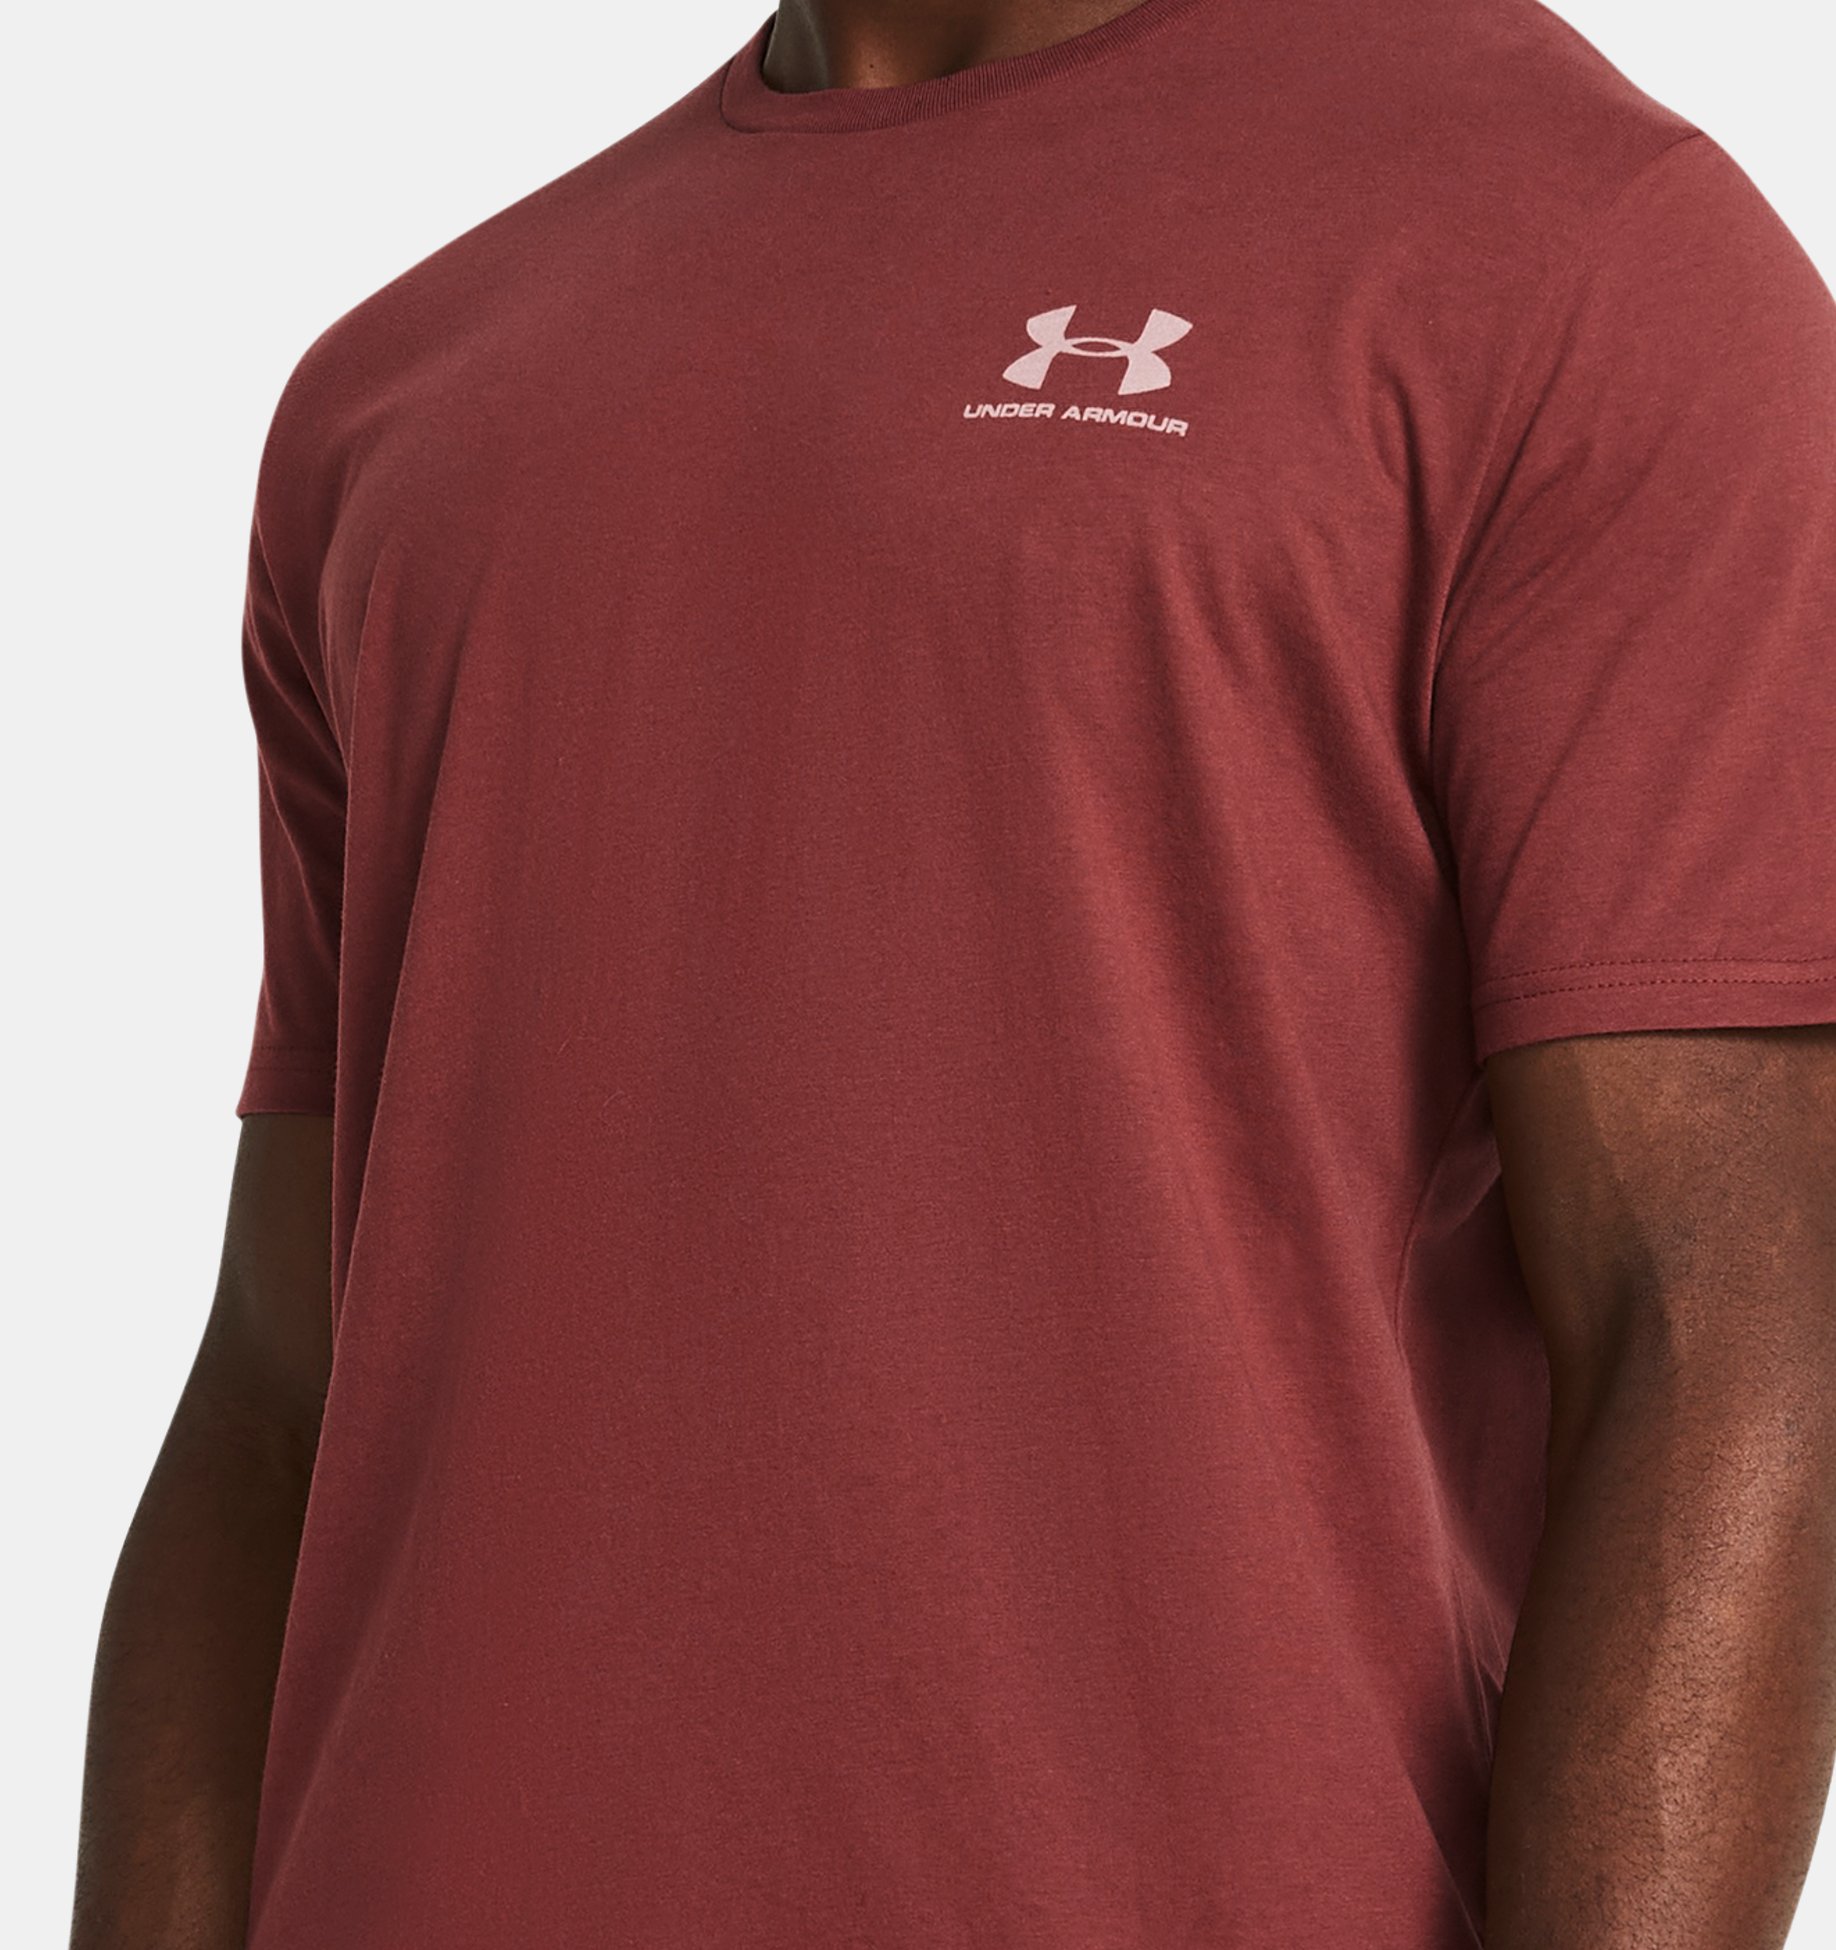 Under Armour UA Sportstyle Branded Men’s Graphic T-Shirt Herren 1318567-001